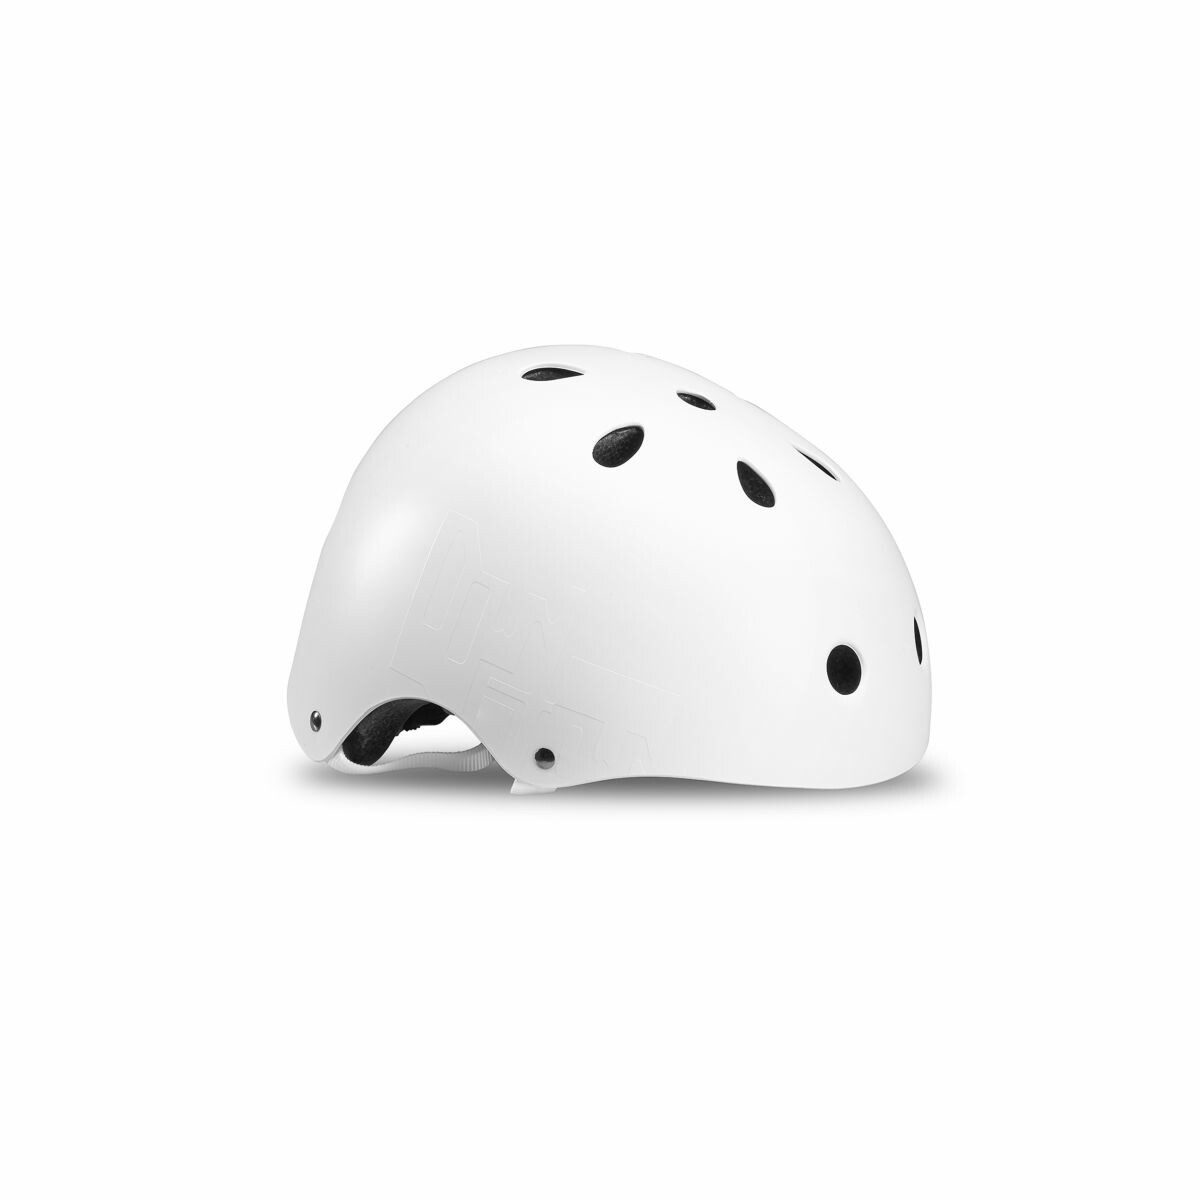 Rollerblade Downtown inline skate helm white / black | 8050459461046